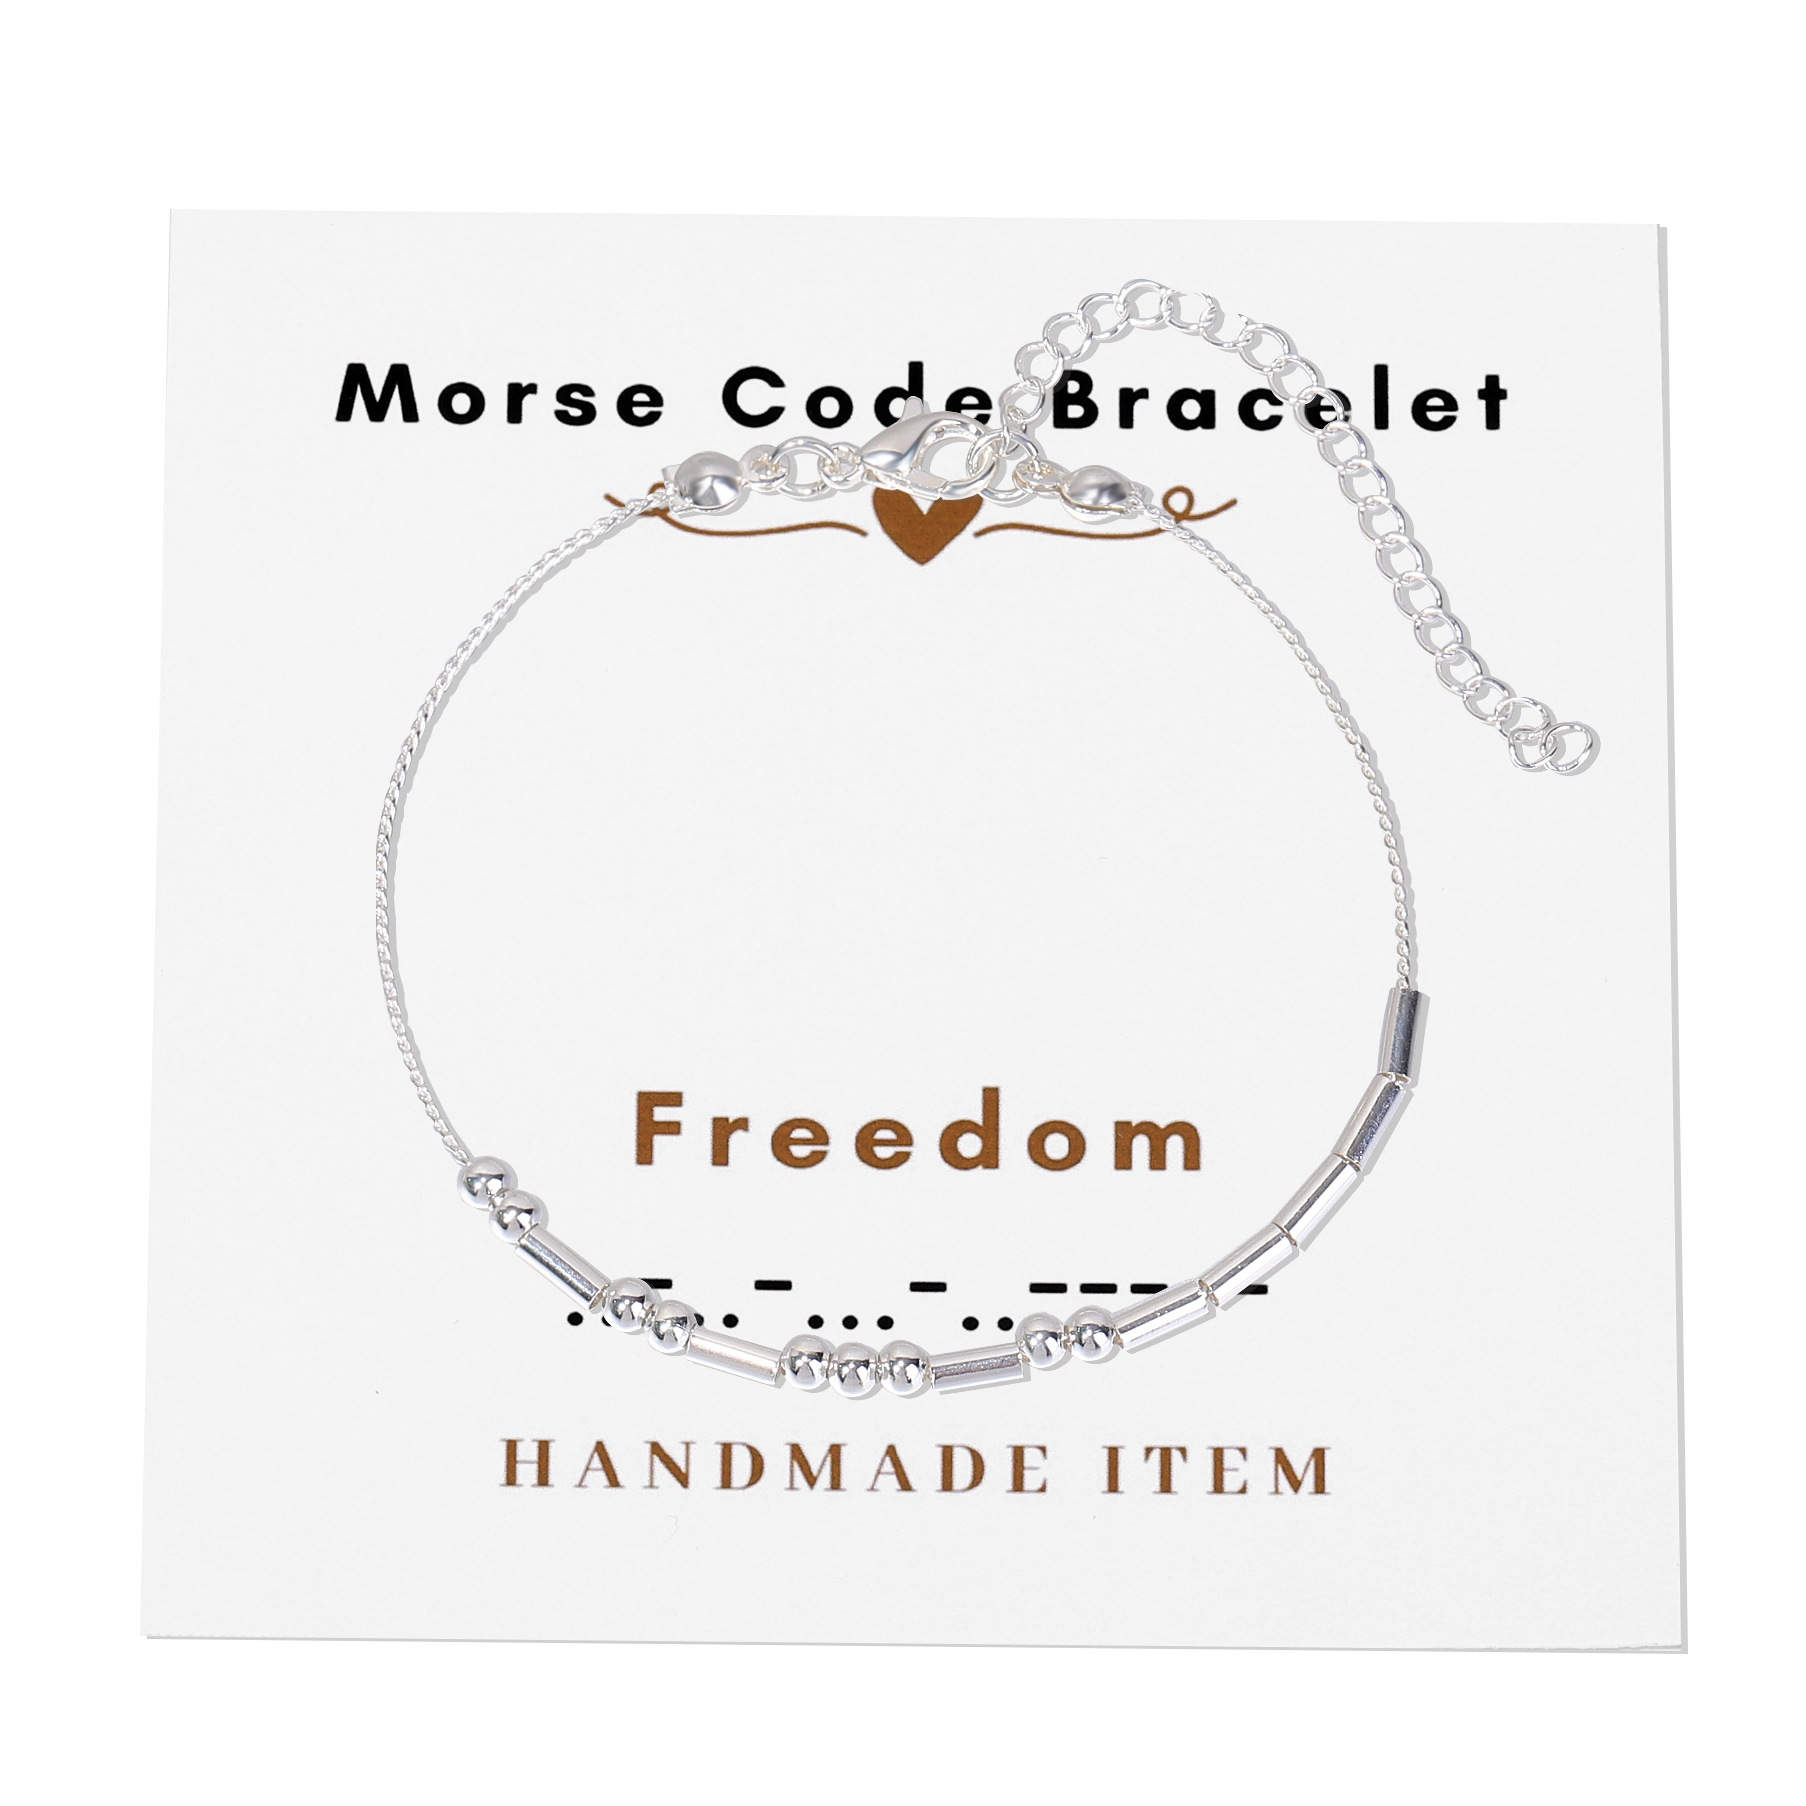 Morse Code Bracelet Freedom